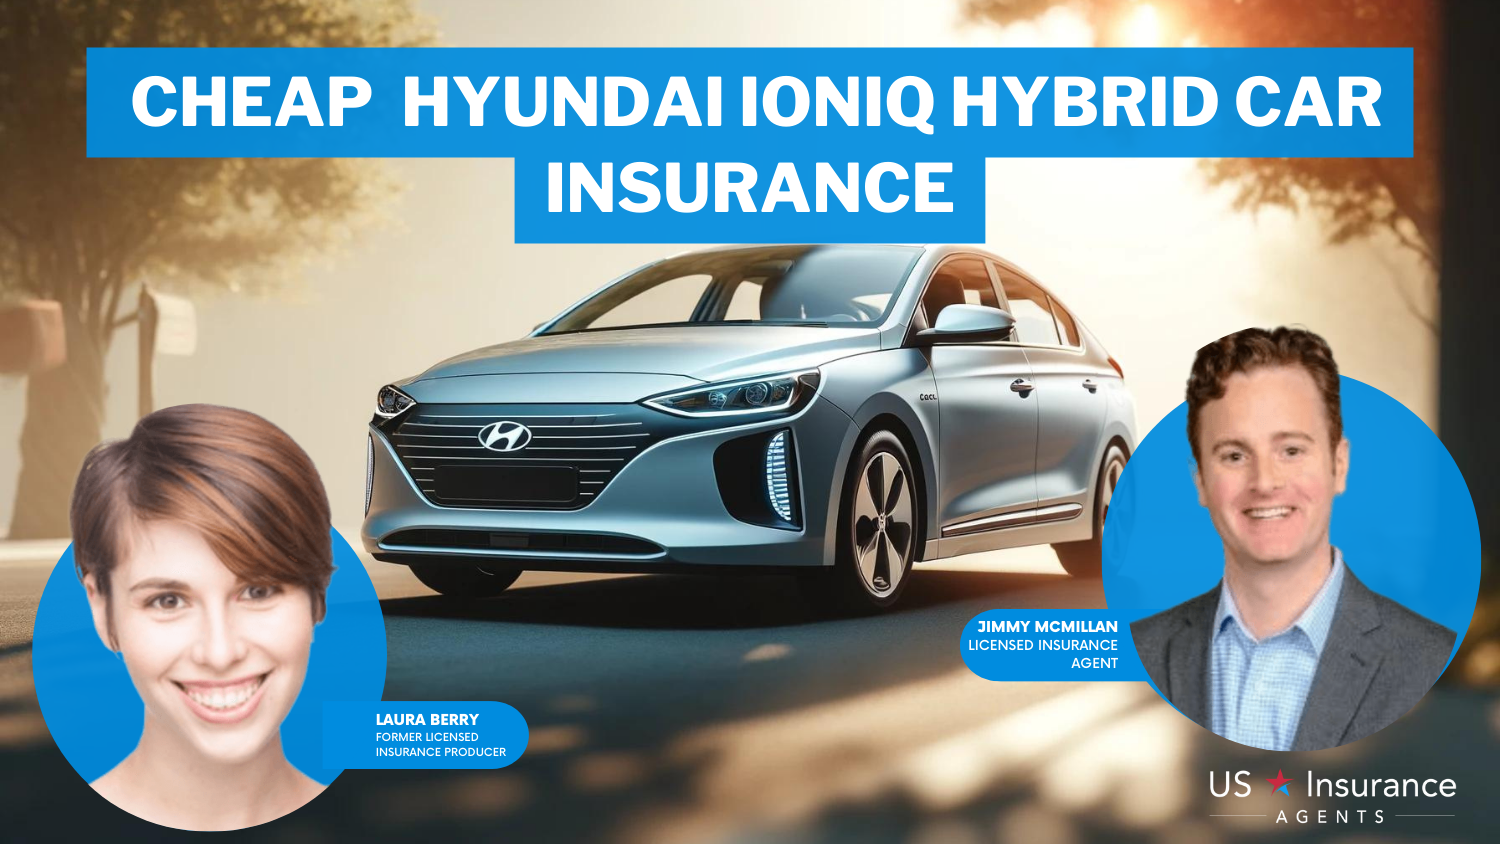 Cheap Hyundai Ioniq Hybrid Car Insurance: Progressive, Allstate, and Travelers